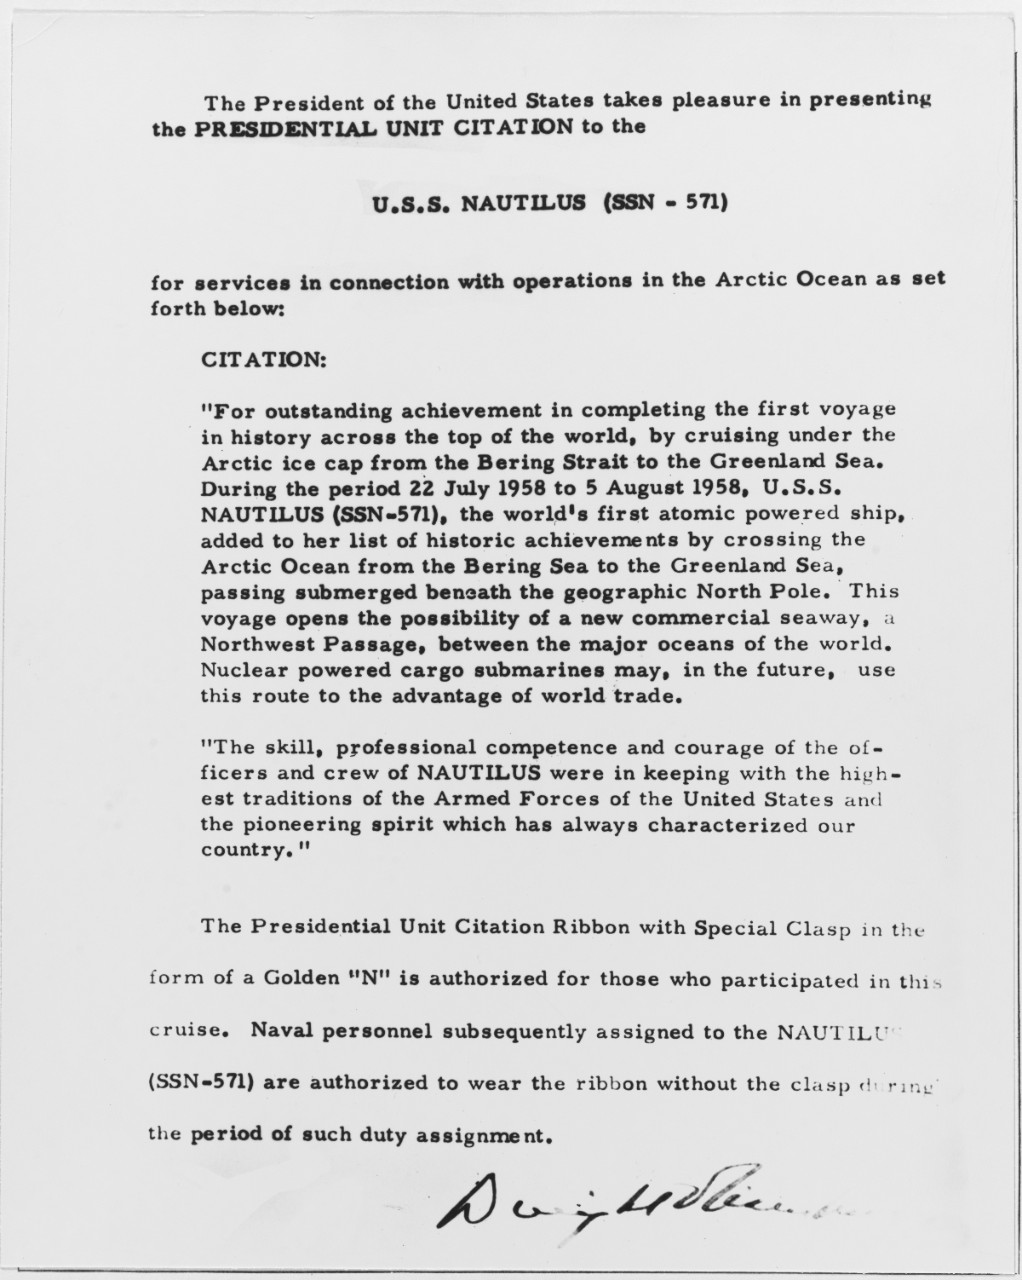 Presidential Unit Citation for USS NAUTILUS (SSN-571), 1958